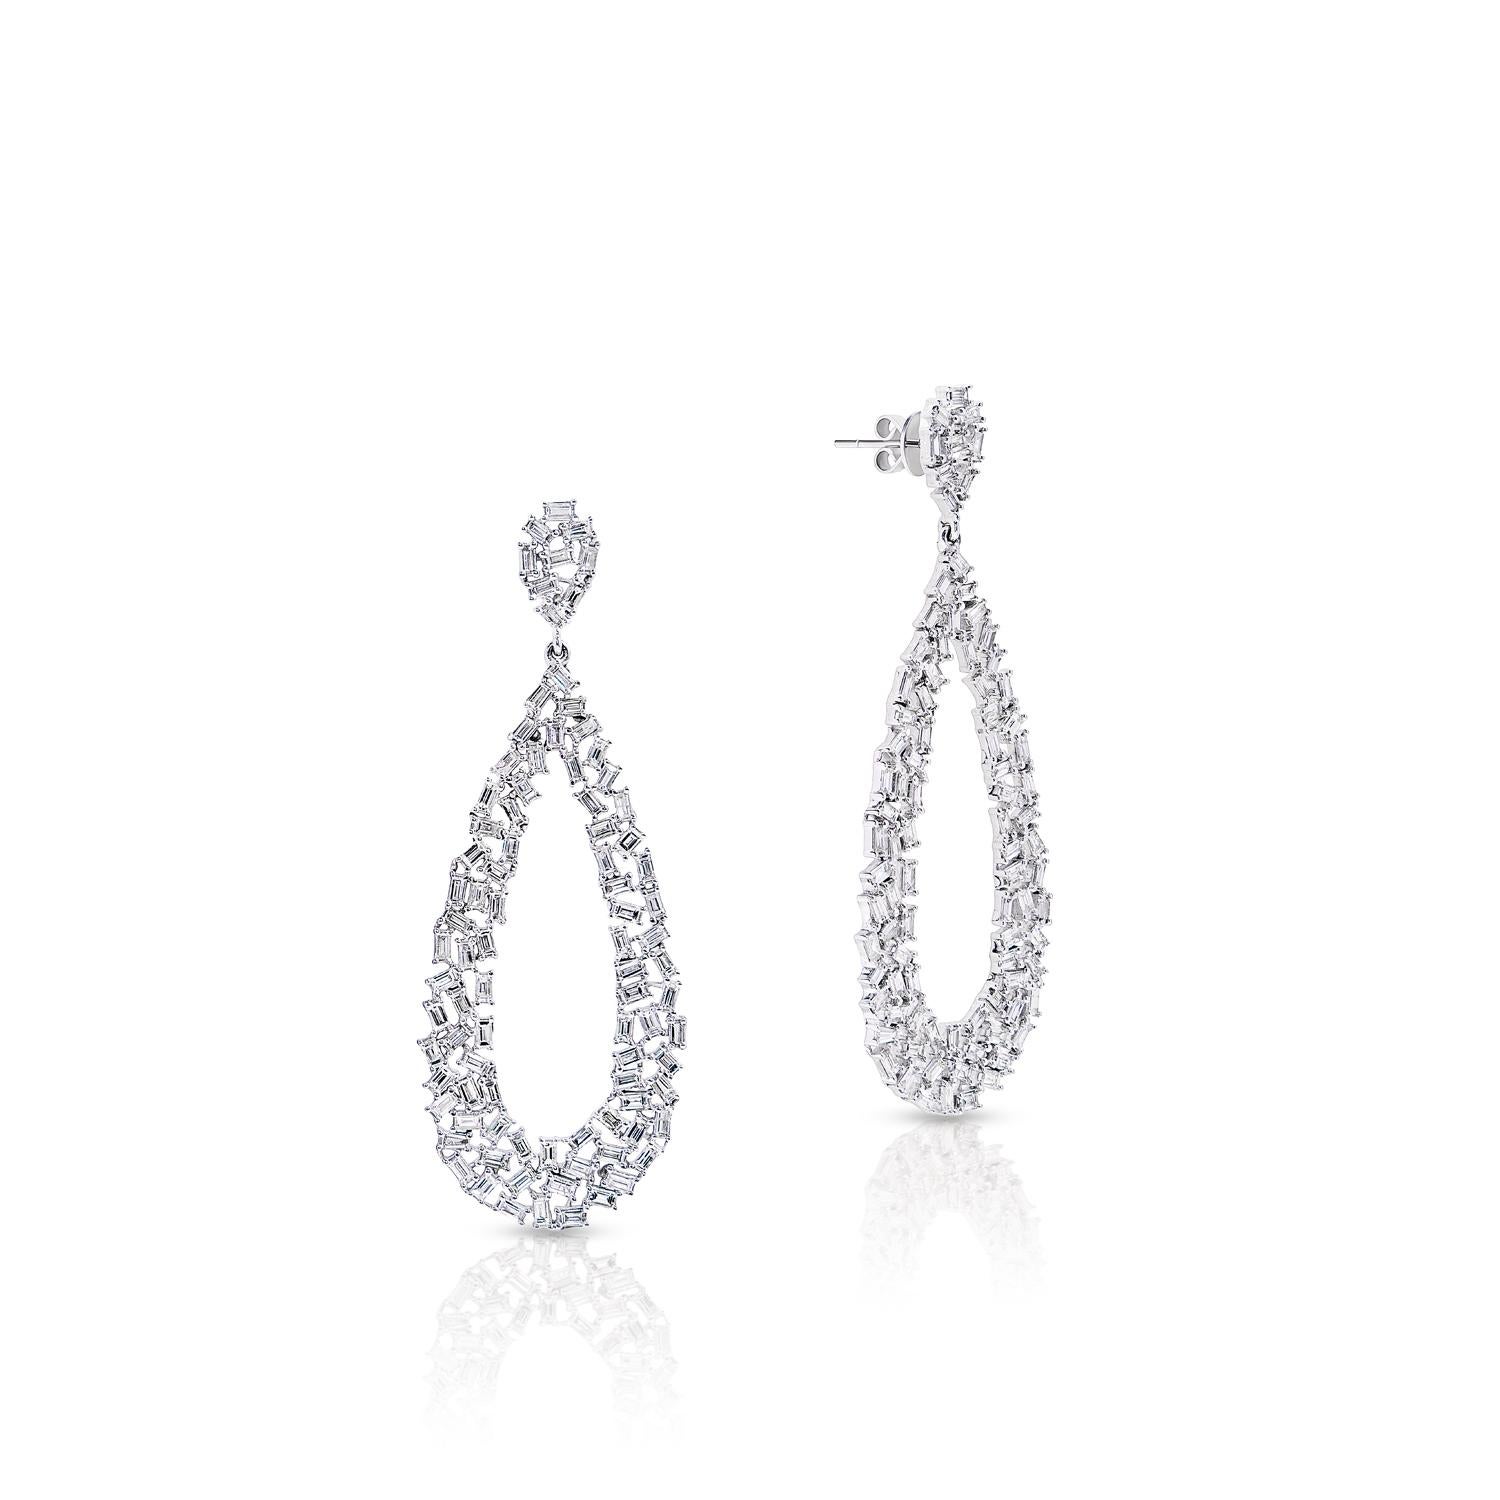 Diamond Hanging Earrings For Ladies:

Main Diamonds:
Carat Weight: 4.87 Carats
Shape: Combine Mix Shape (CMB)

Metal: 14 Karat White Gold
Style: Hanging Earrings

Total Carat Weight: 4.87 Carats